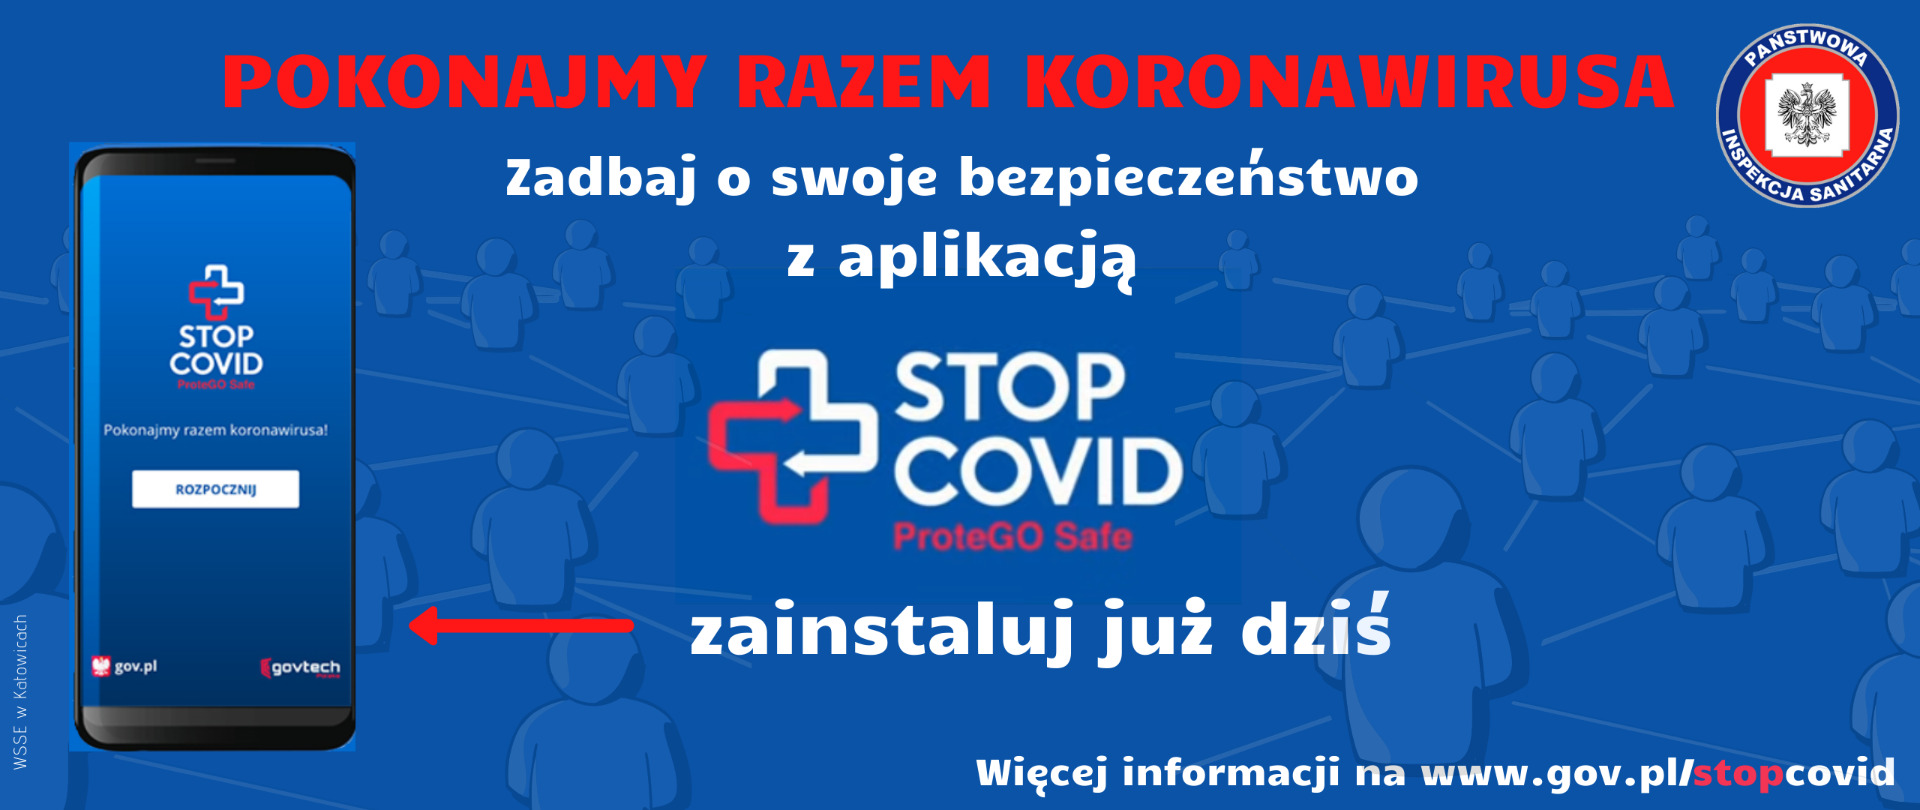 Akcja promująca aplikację STOP COVID ProteGO Safe - Obrazek 1